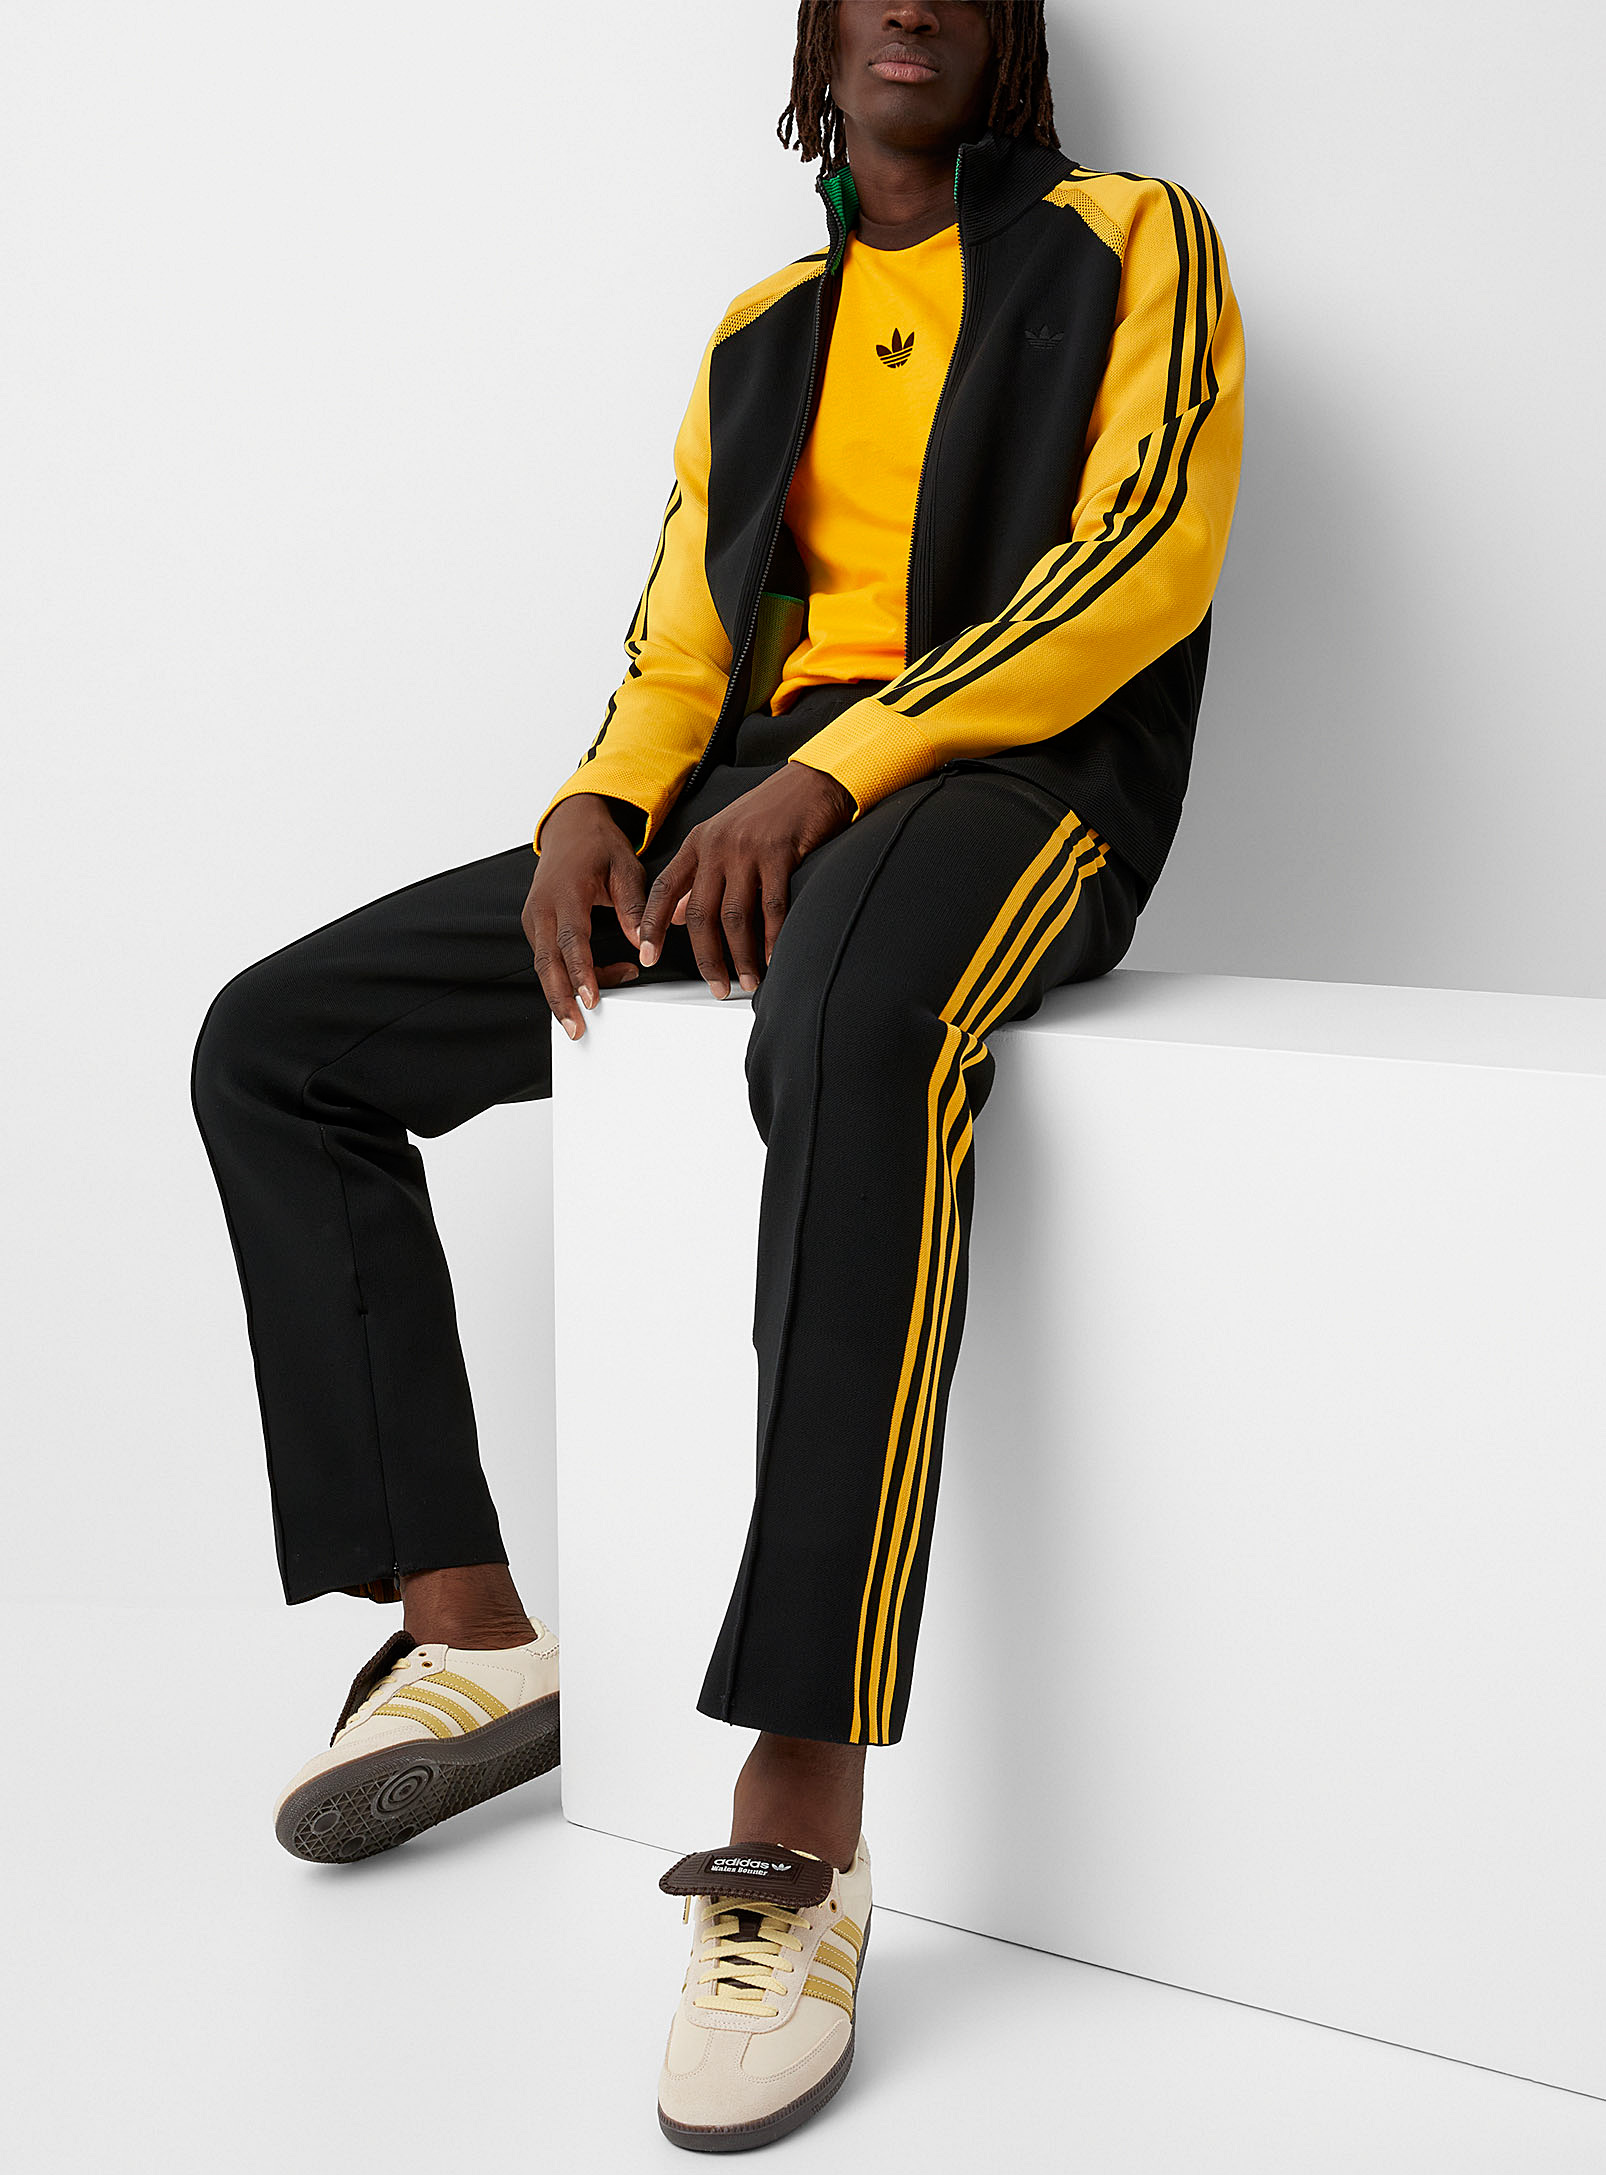 Adidas X Wales Bonner - Men's Yellow stripes knit track pant